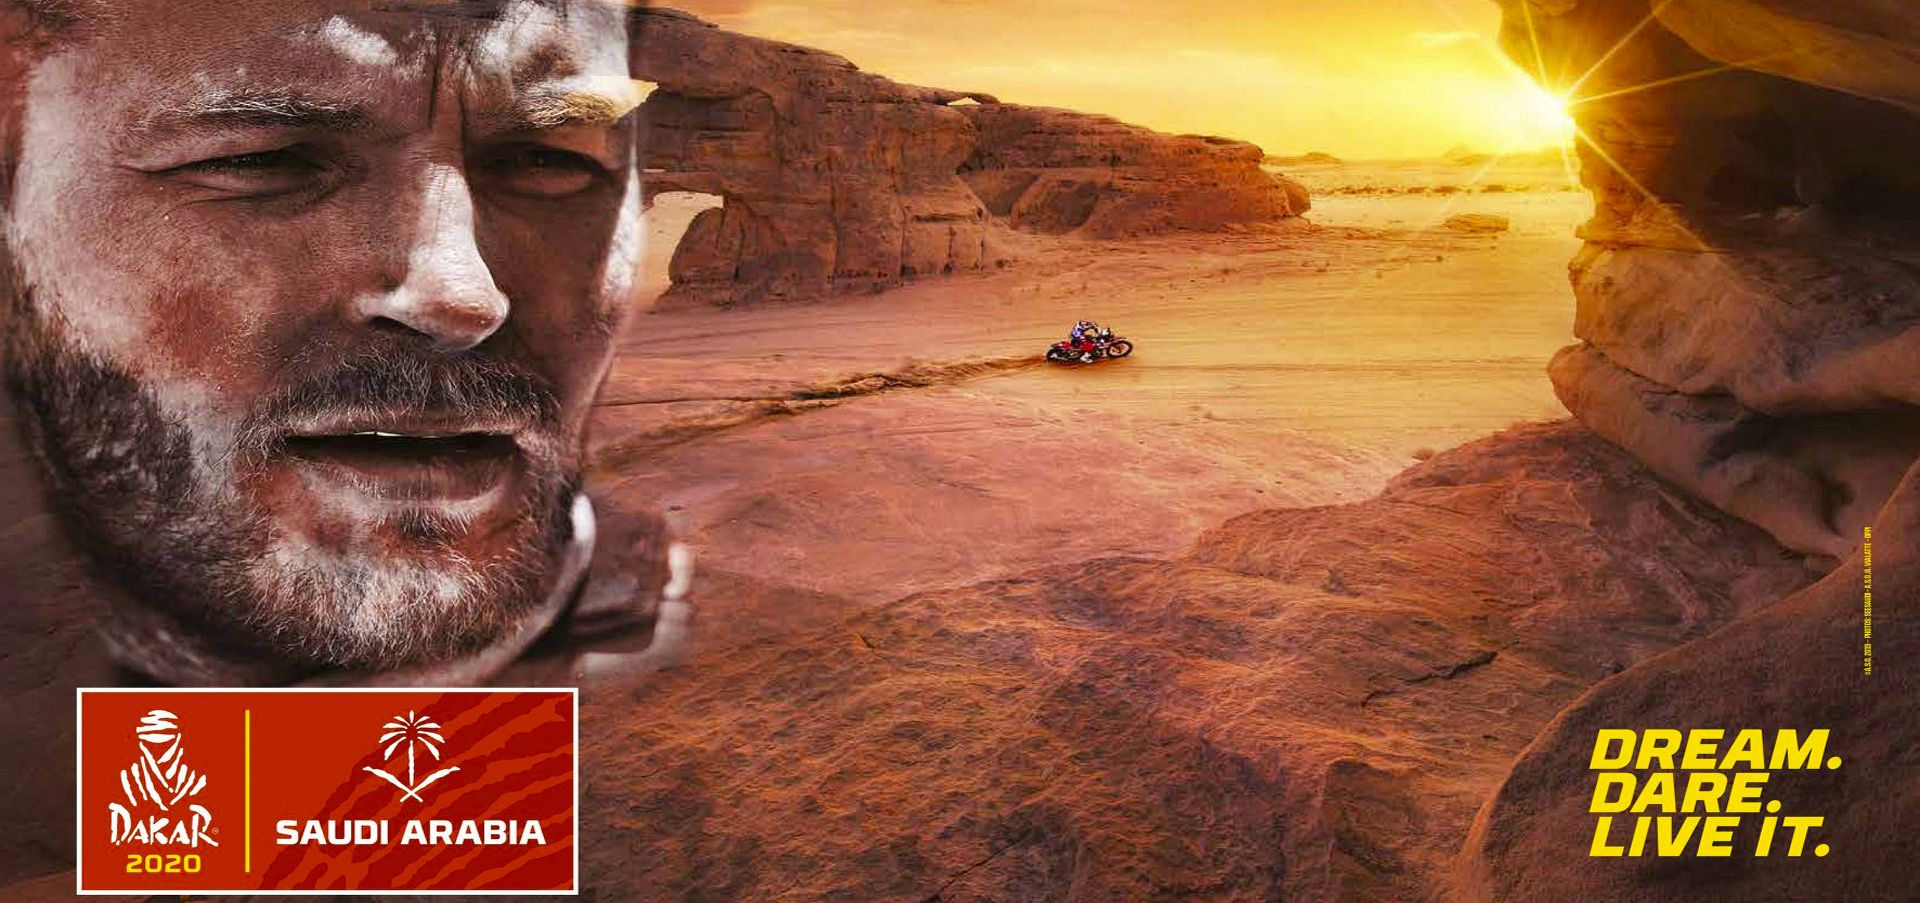 3e60sport organises the Dakar Launch Event in Saudi Arabia